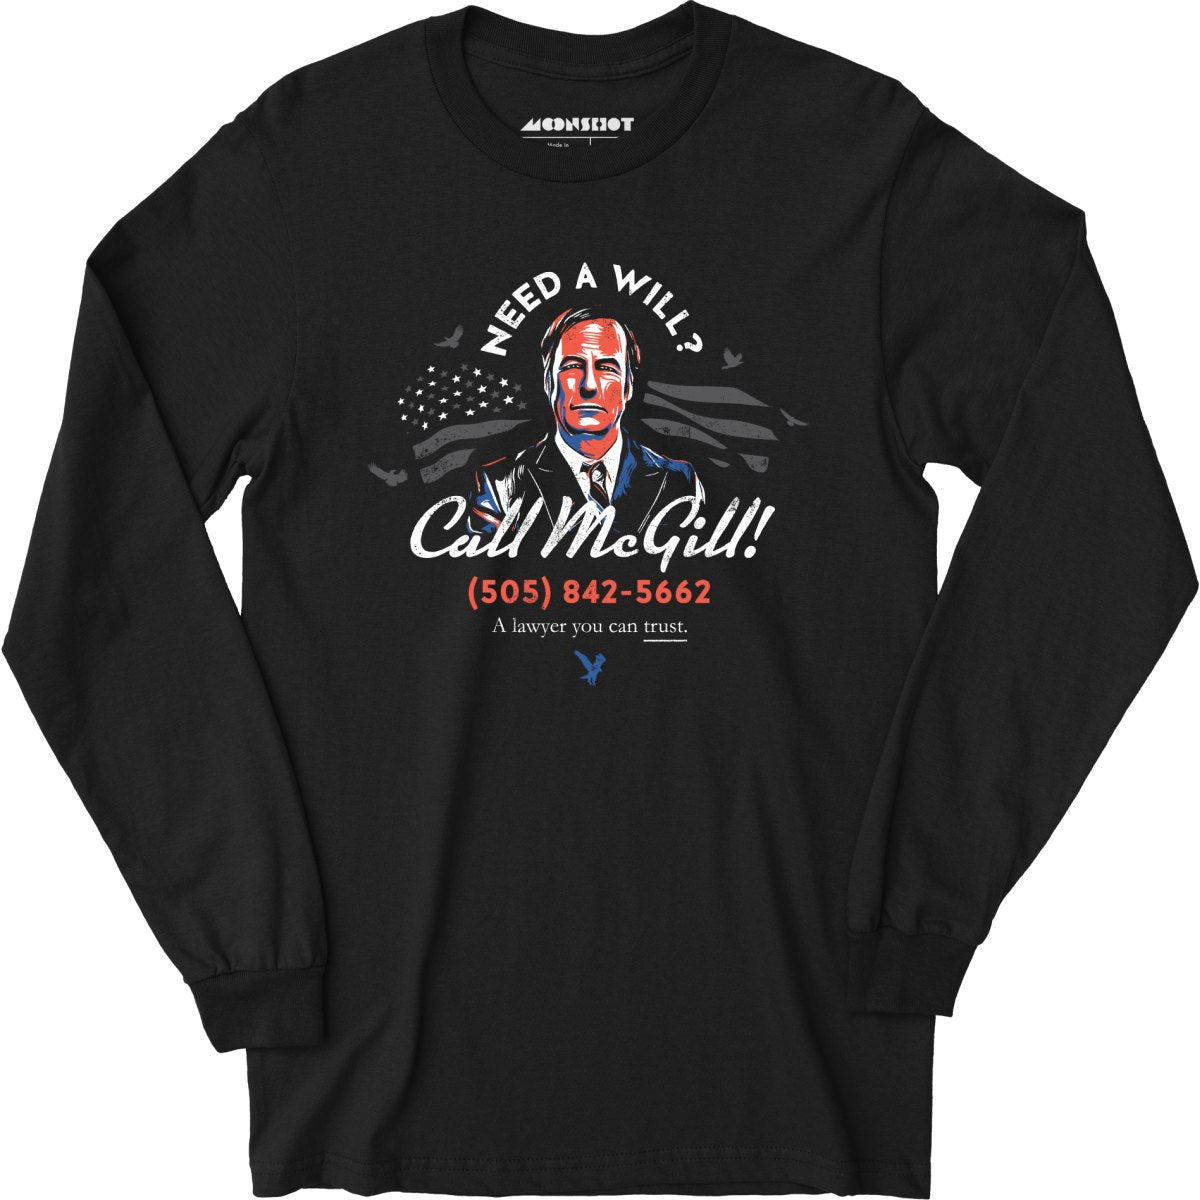 Need a Will? Call McGill - Long Sleeve T-Shirt